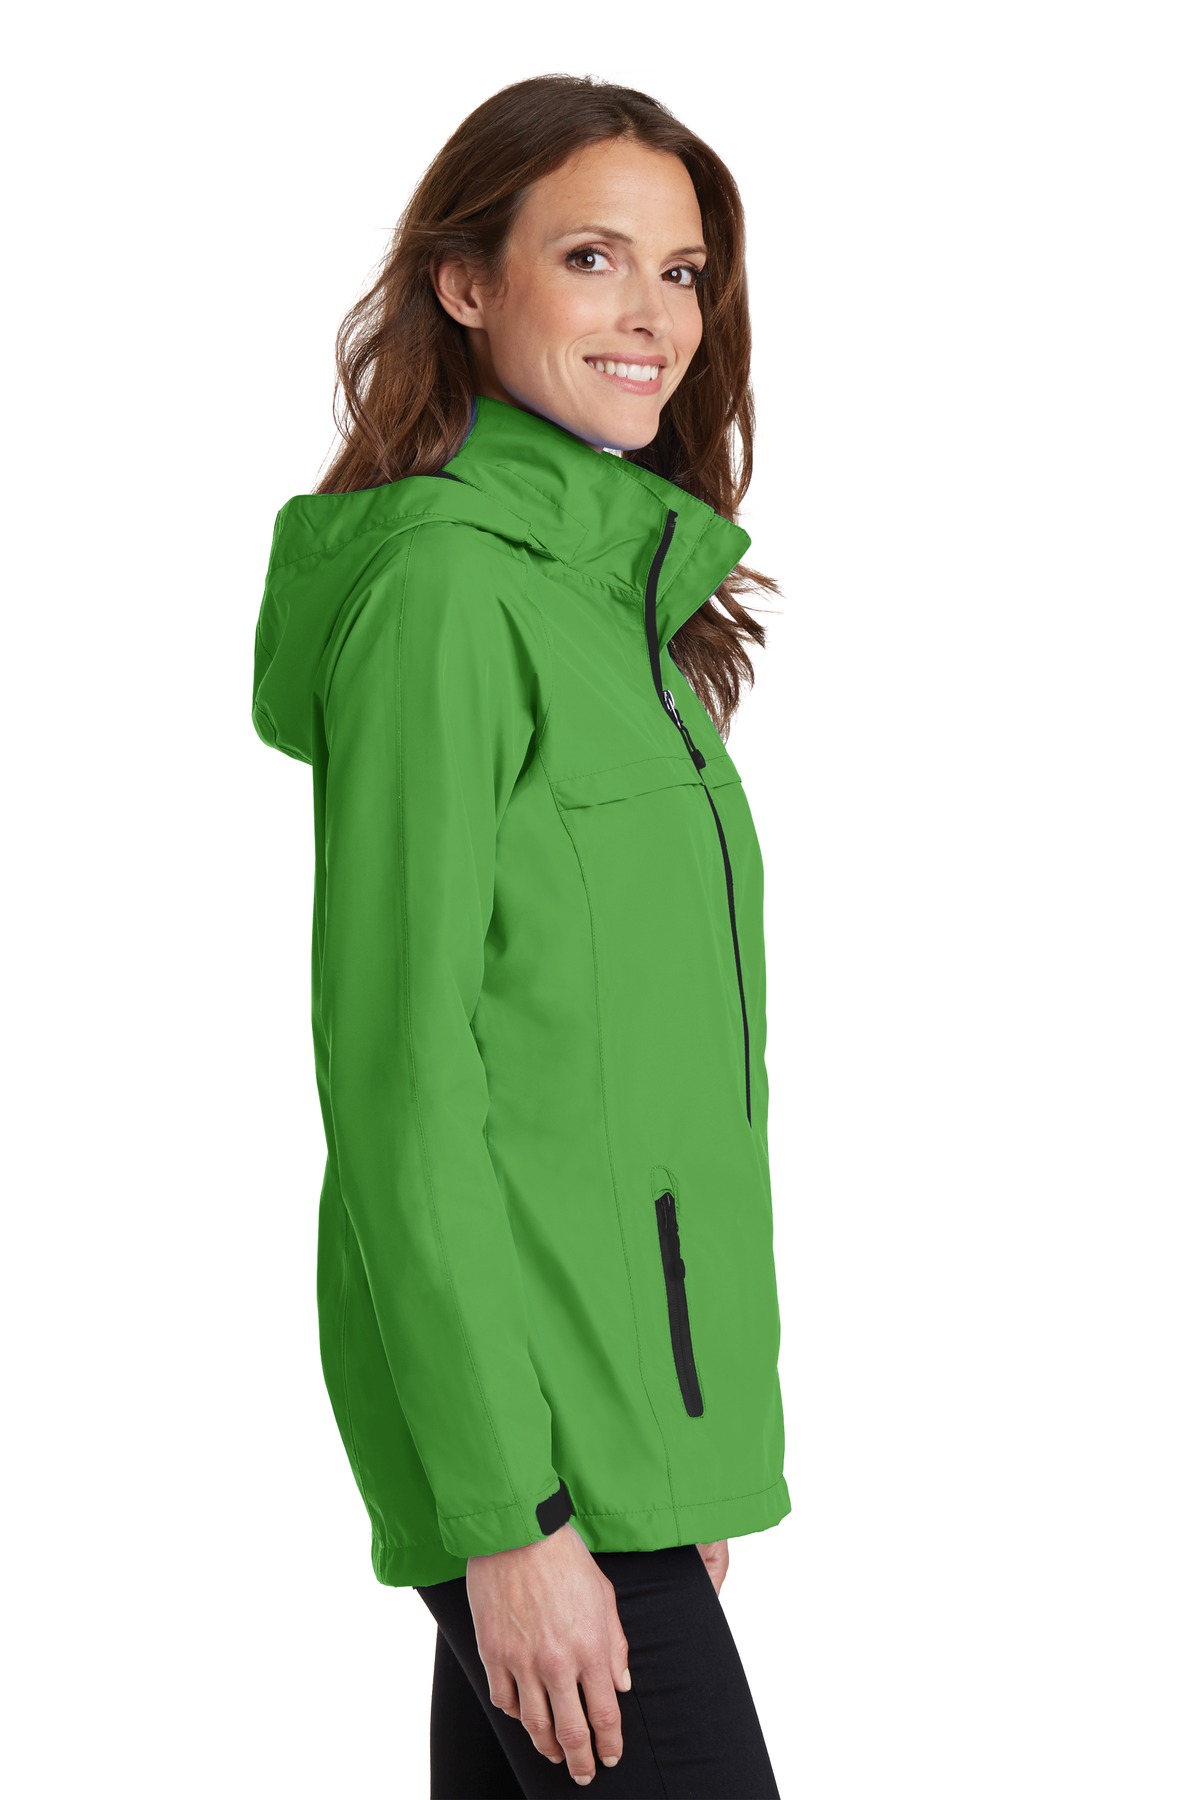 Port Authority Ladies Torrent Waterproof Jacket-L (Vine Green) - image 3 of 6